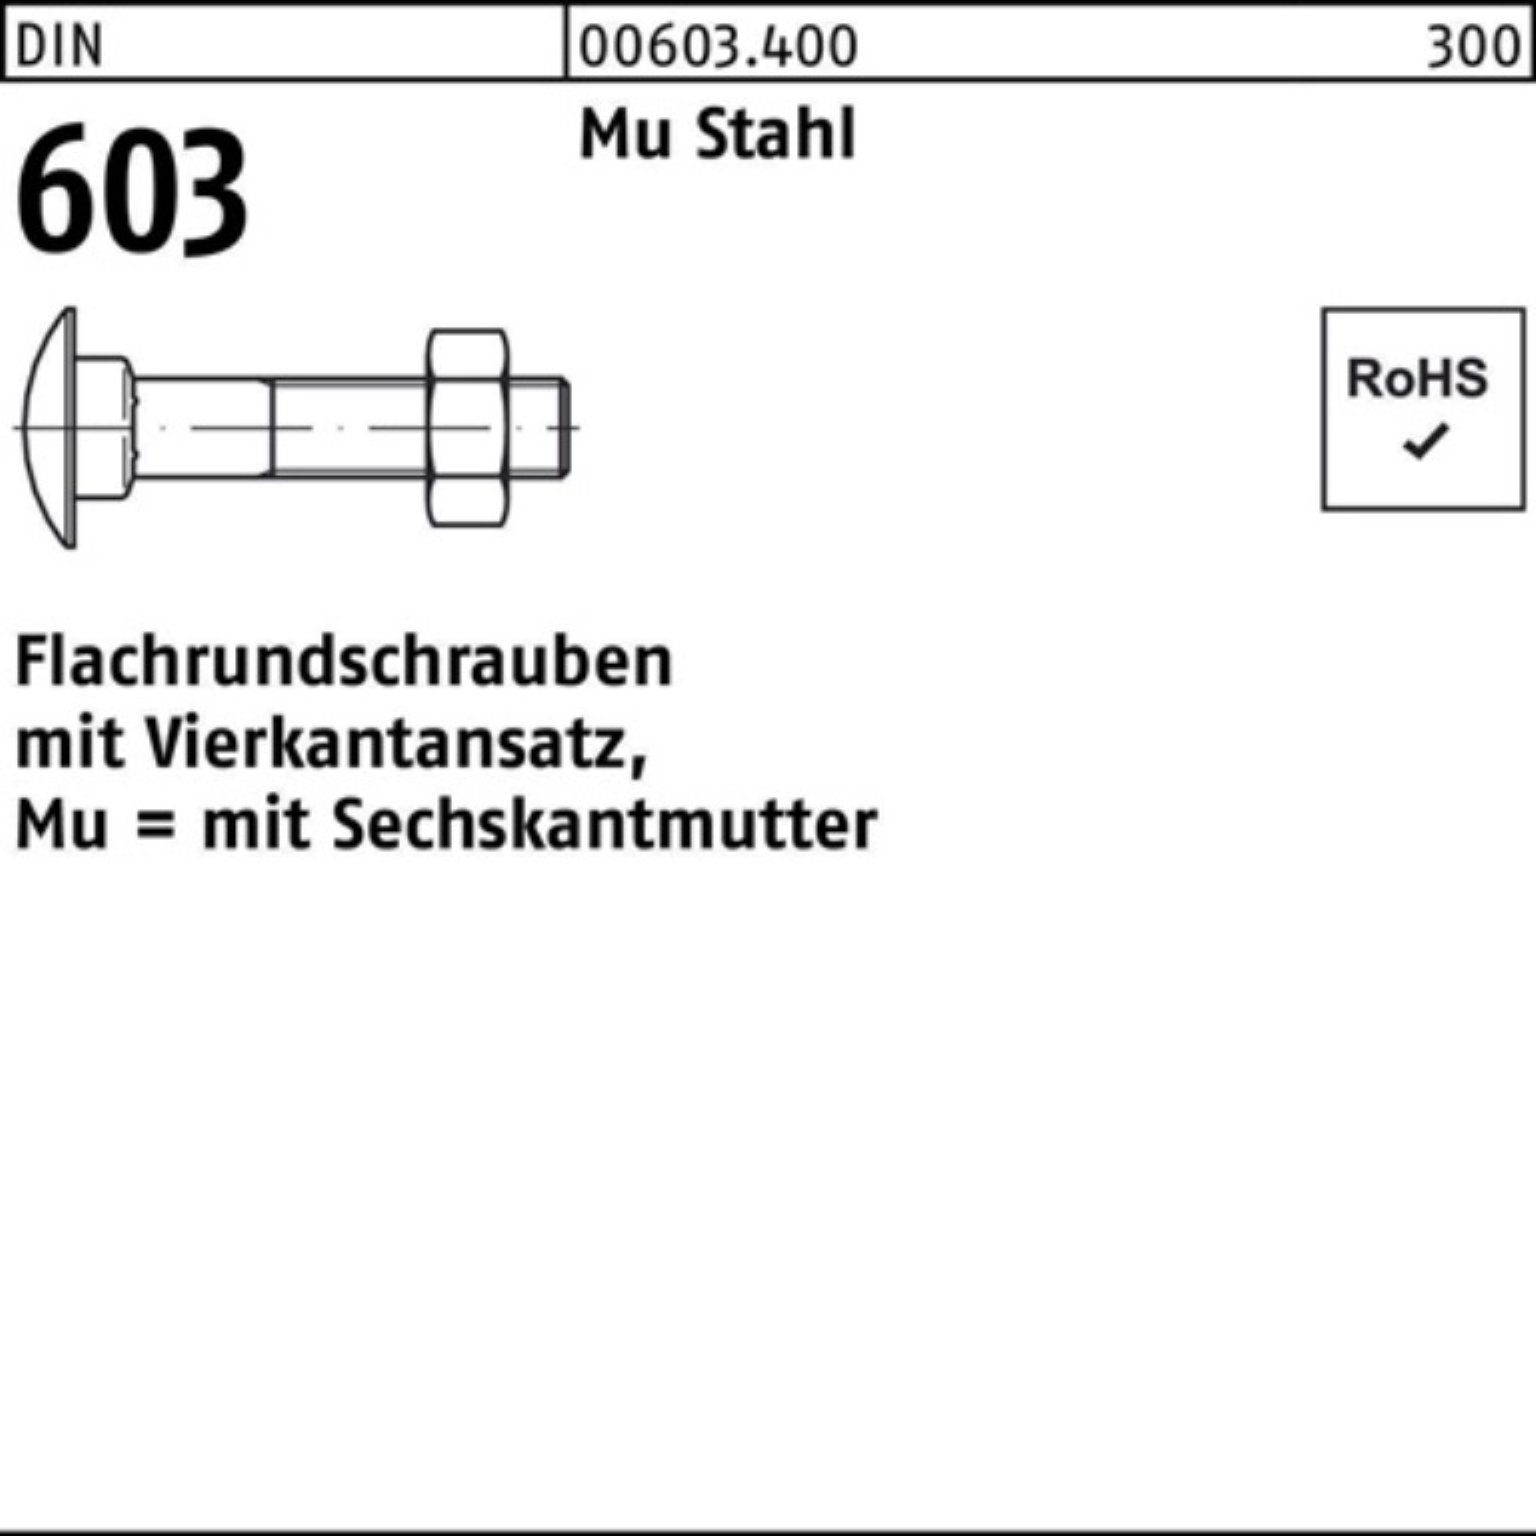 Vierkantansatz/6-ktmutter 200er M8x65 603 Reyher Flachrundschraube DIN M Pack Schraube